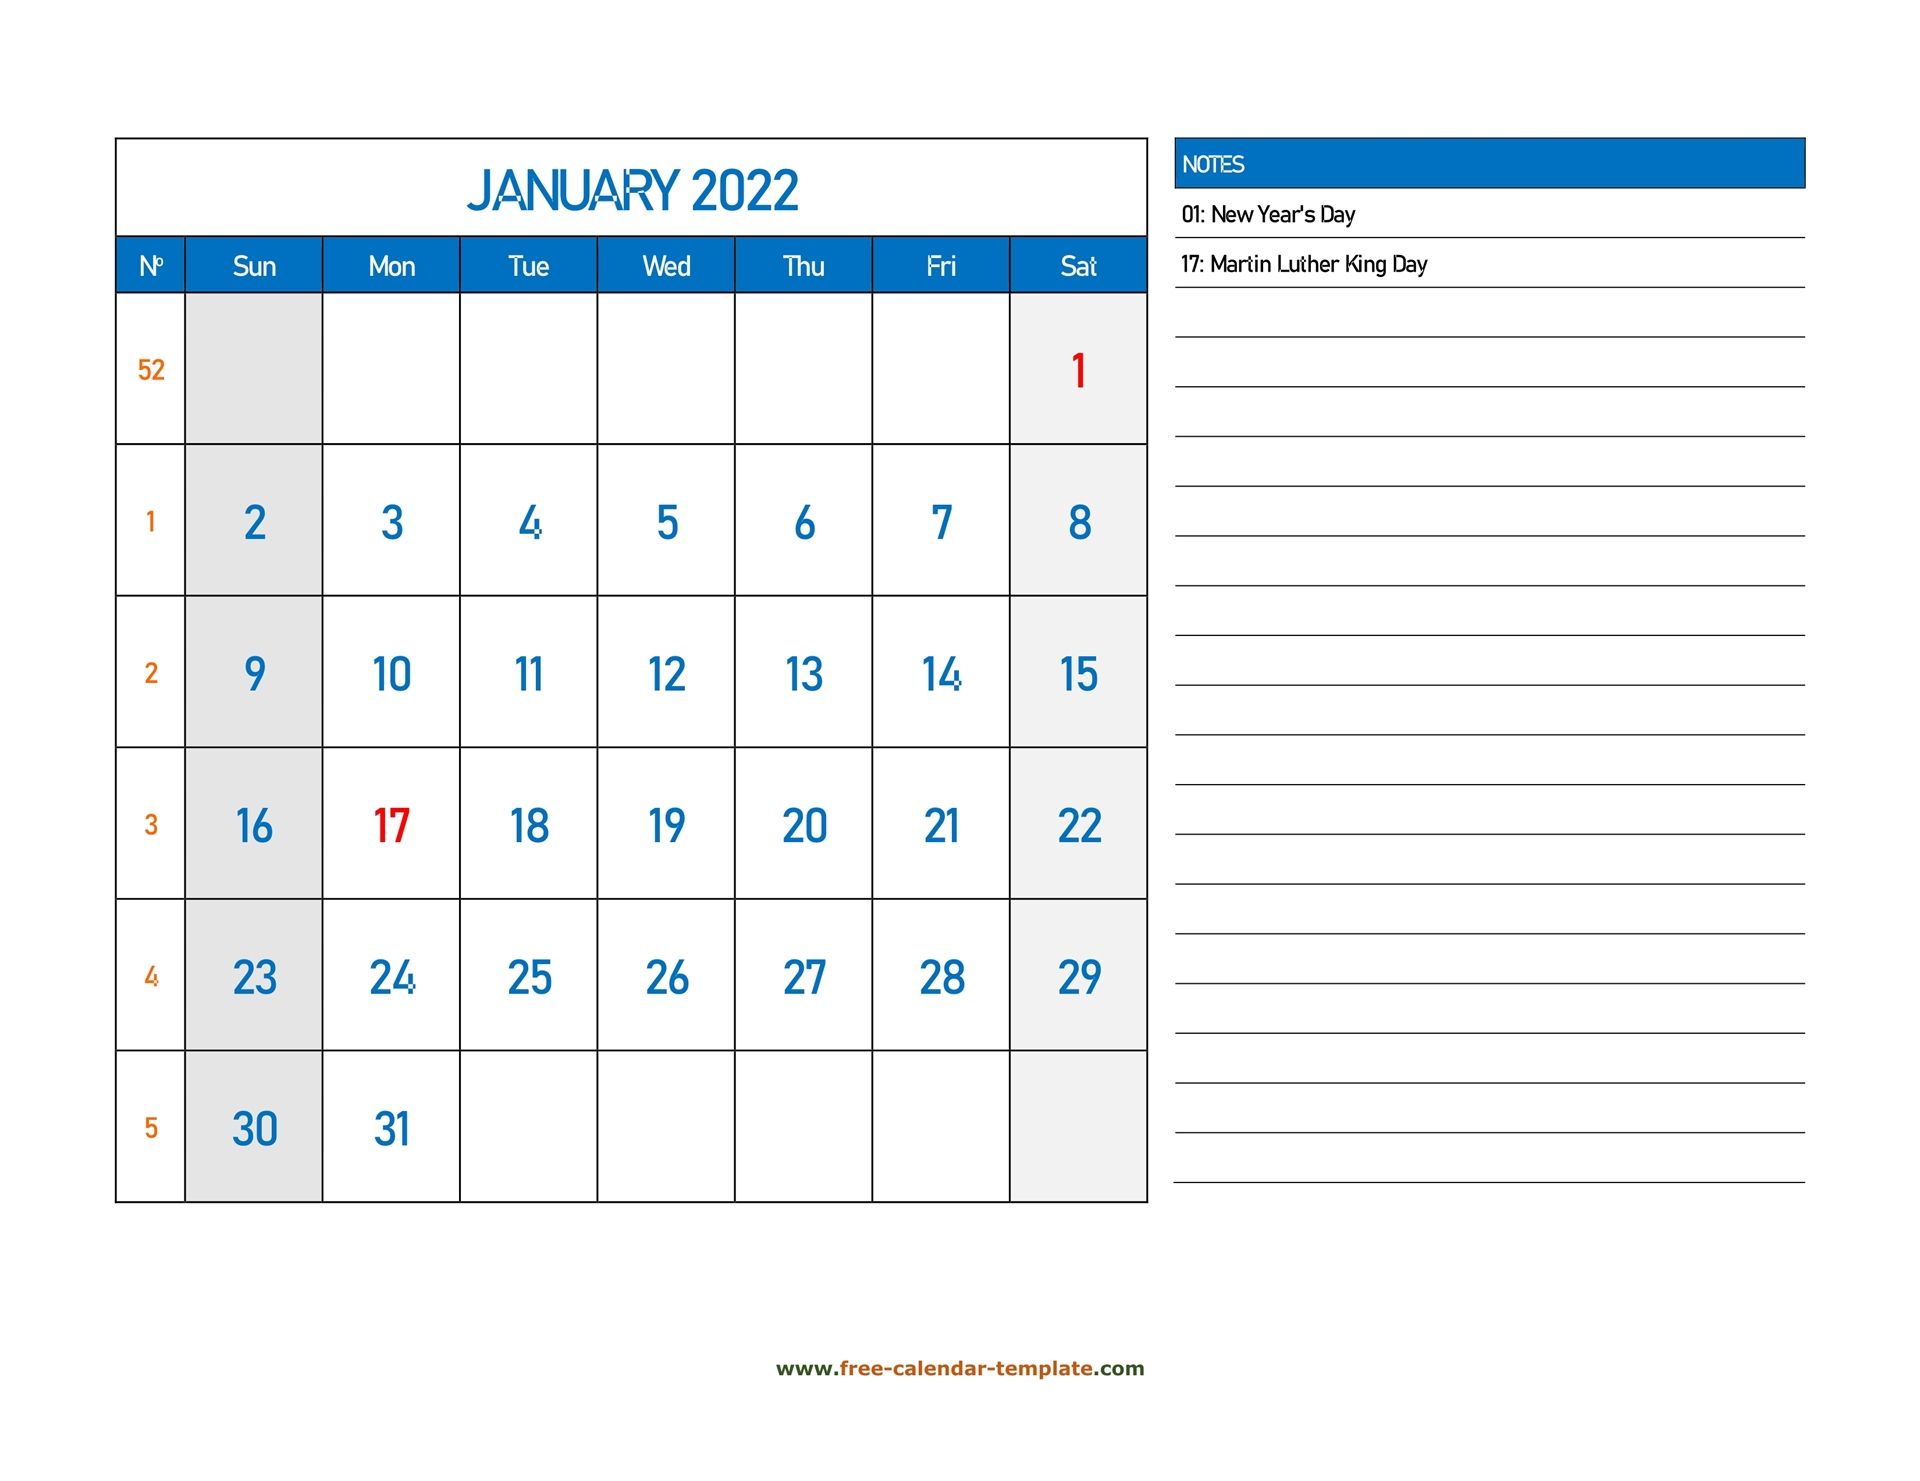 Take Calendar 2022 January Month